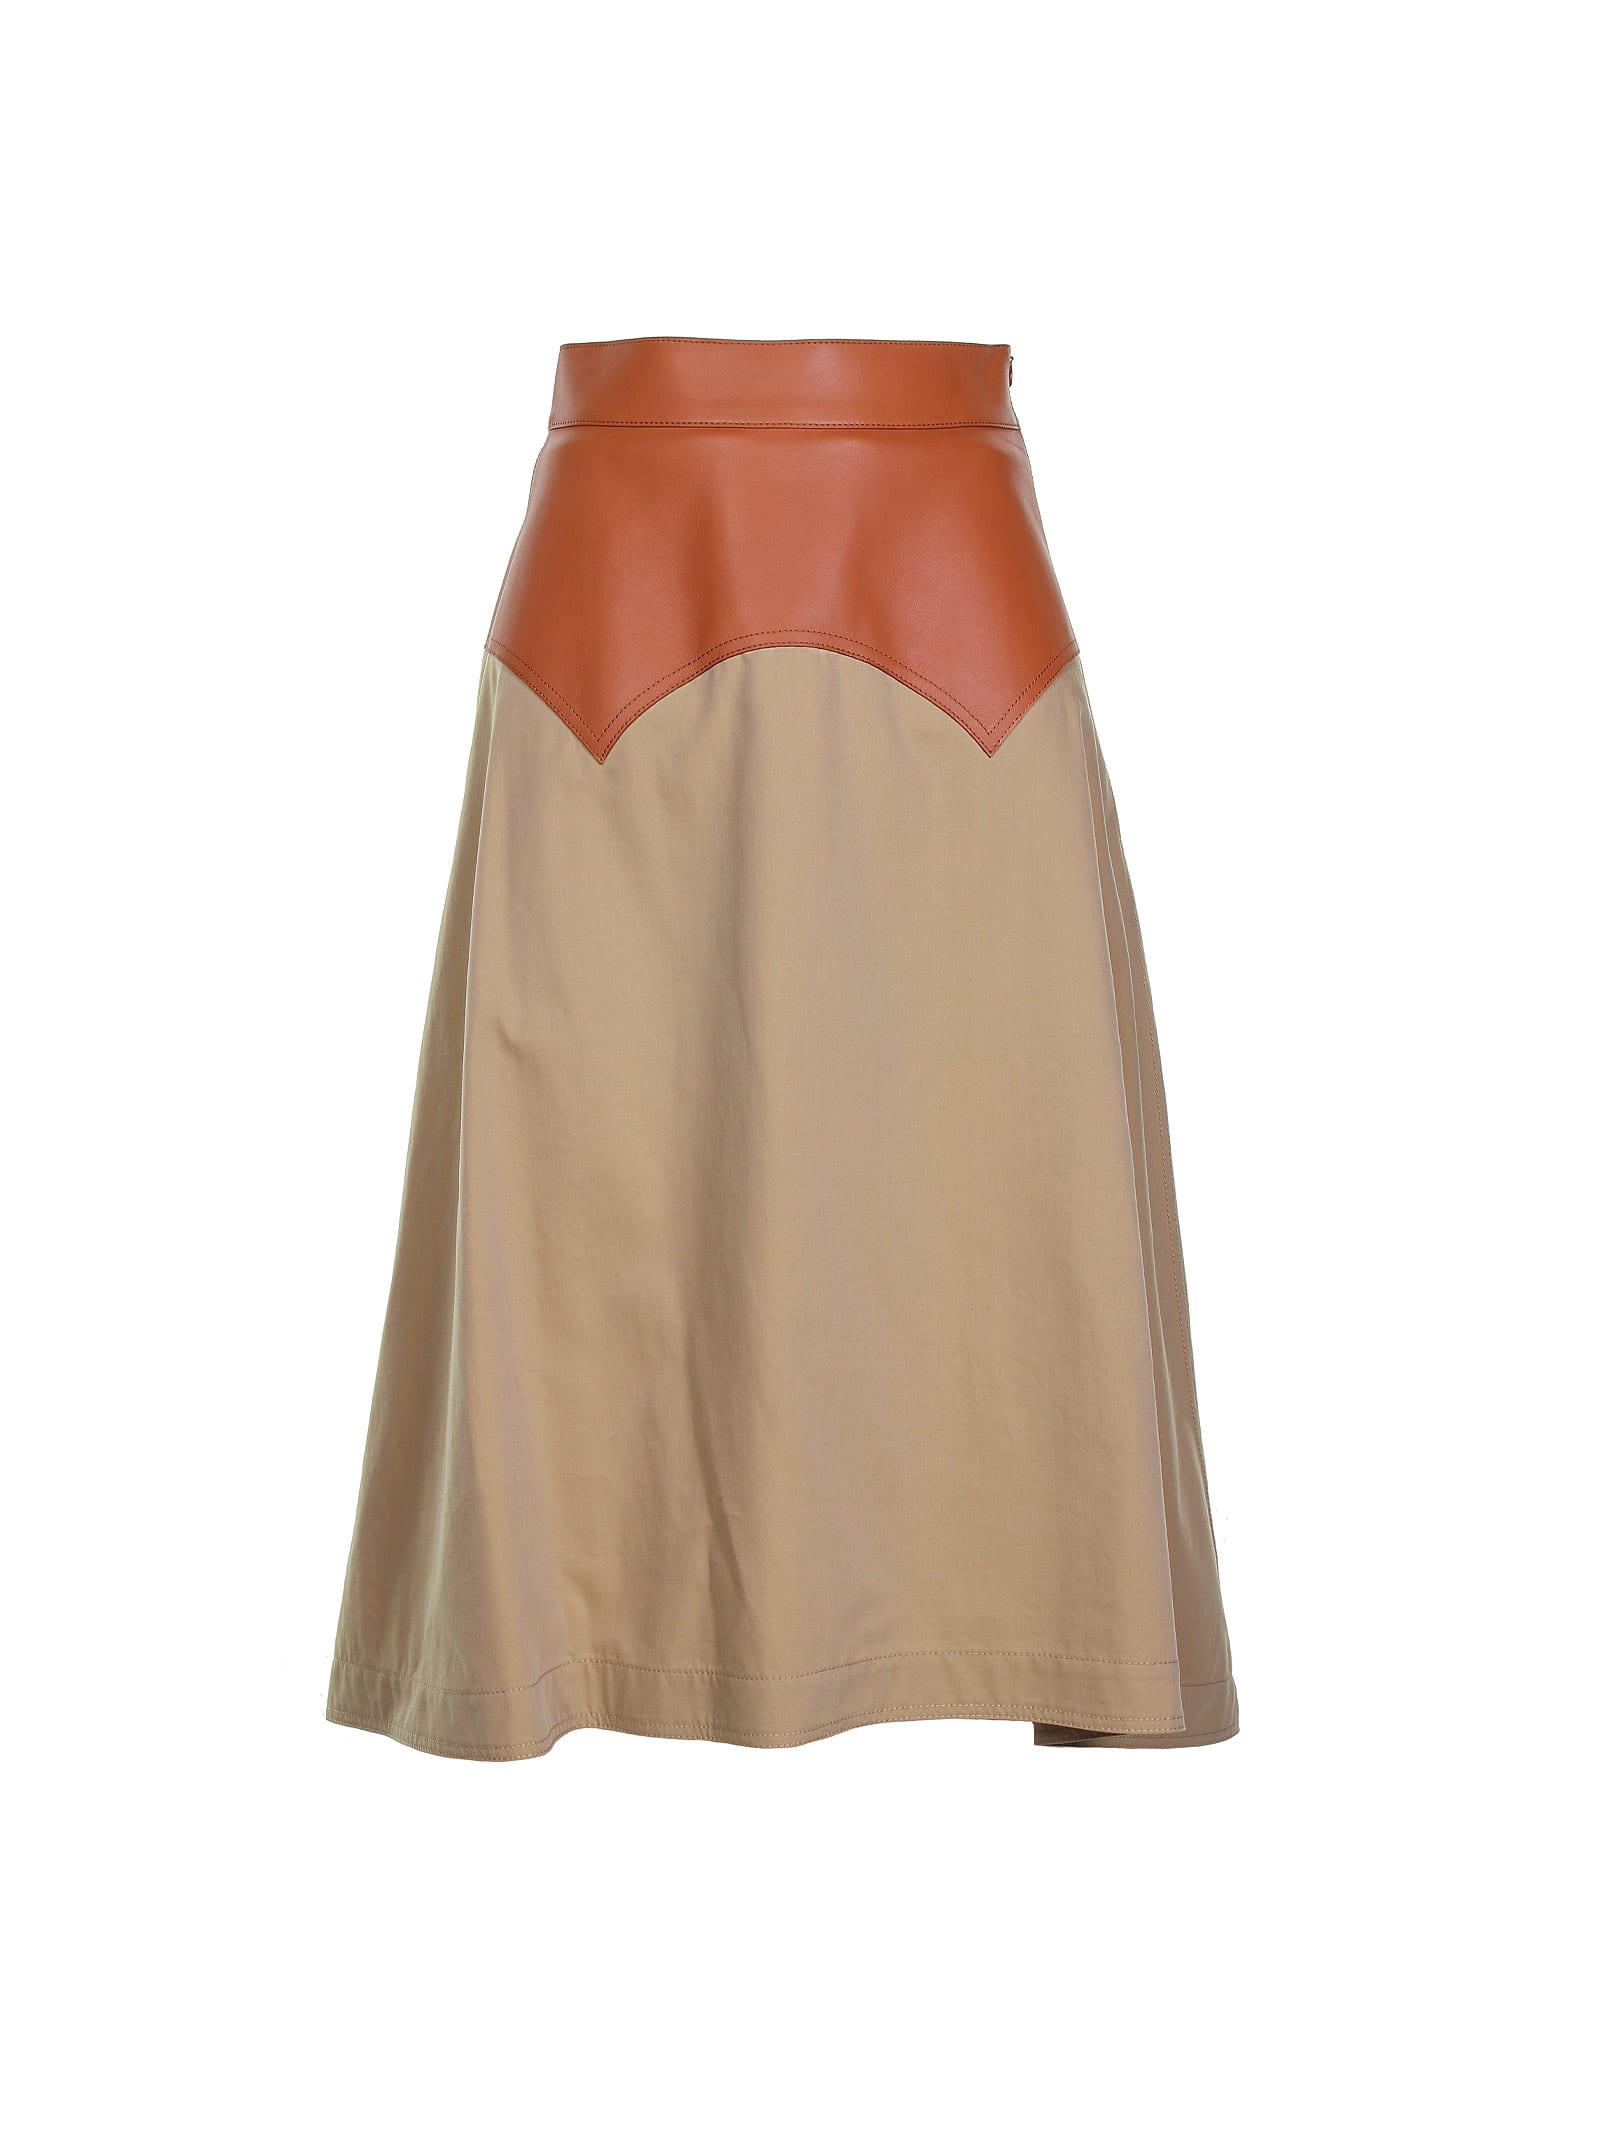 Loewe Loewe Tan And Beige Midi Skirt